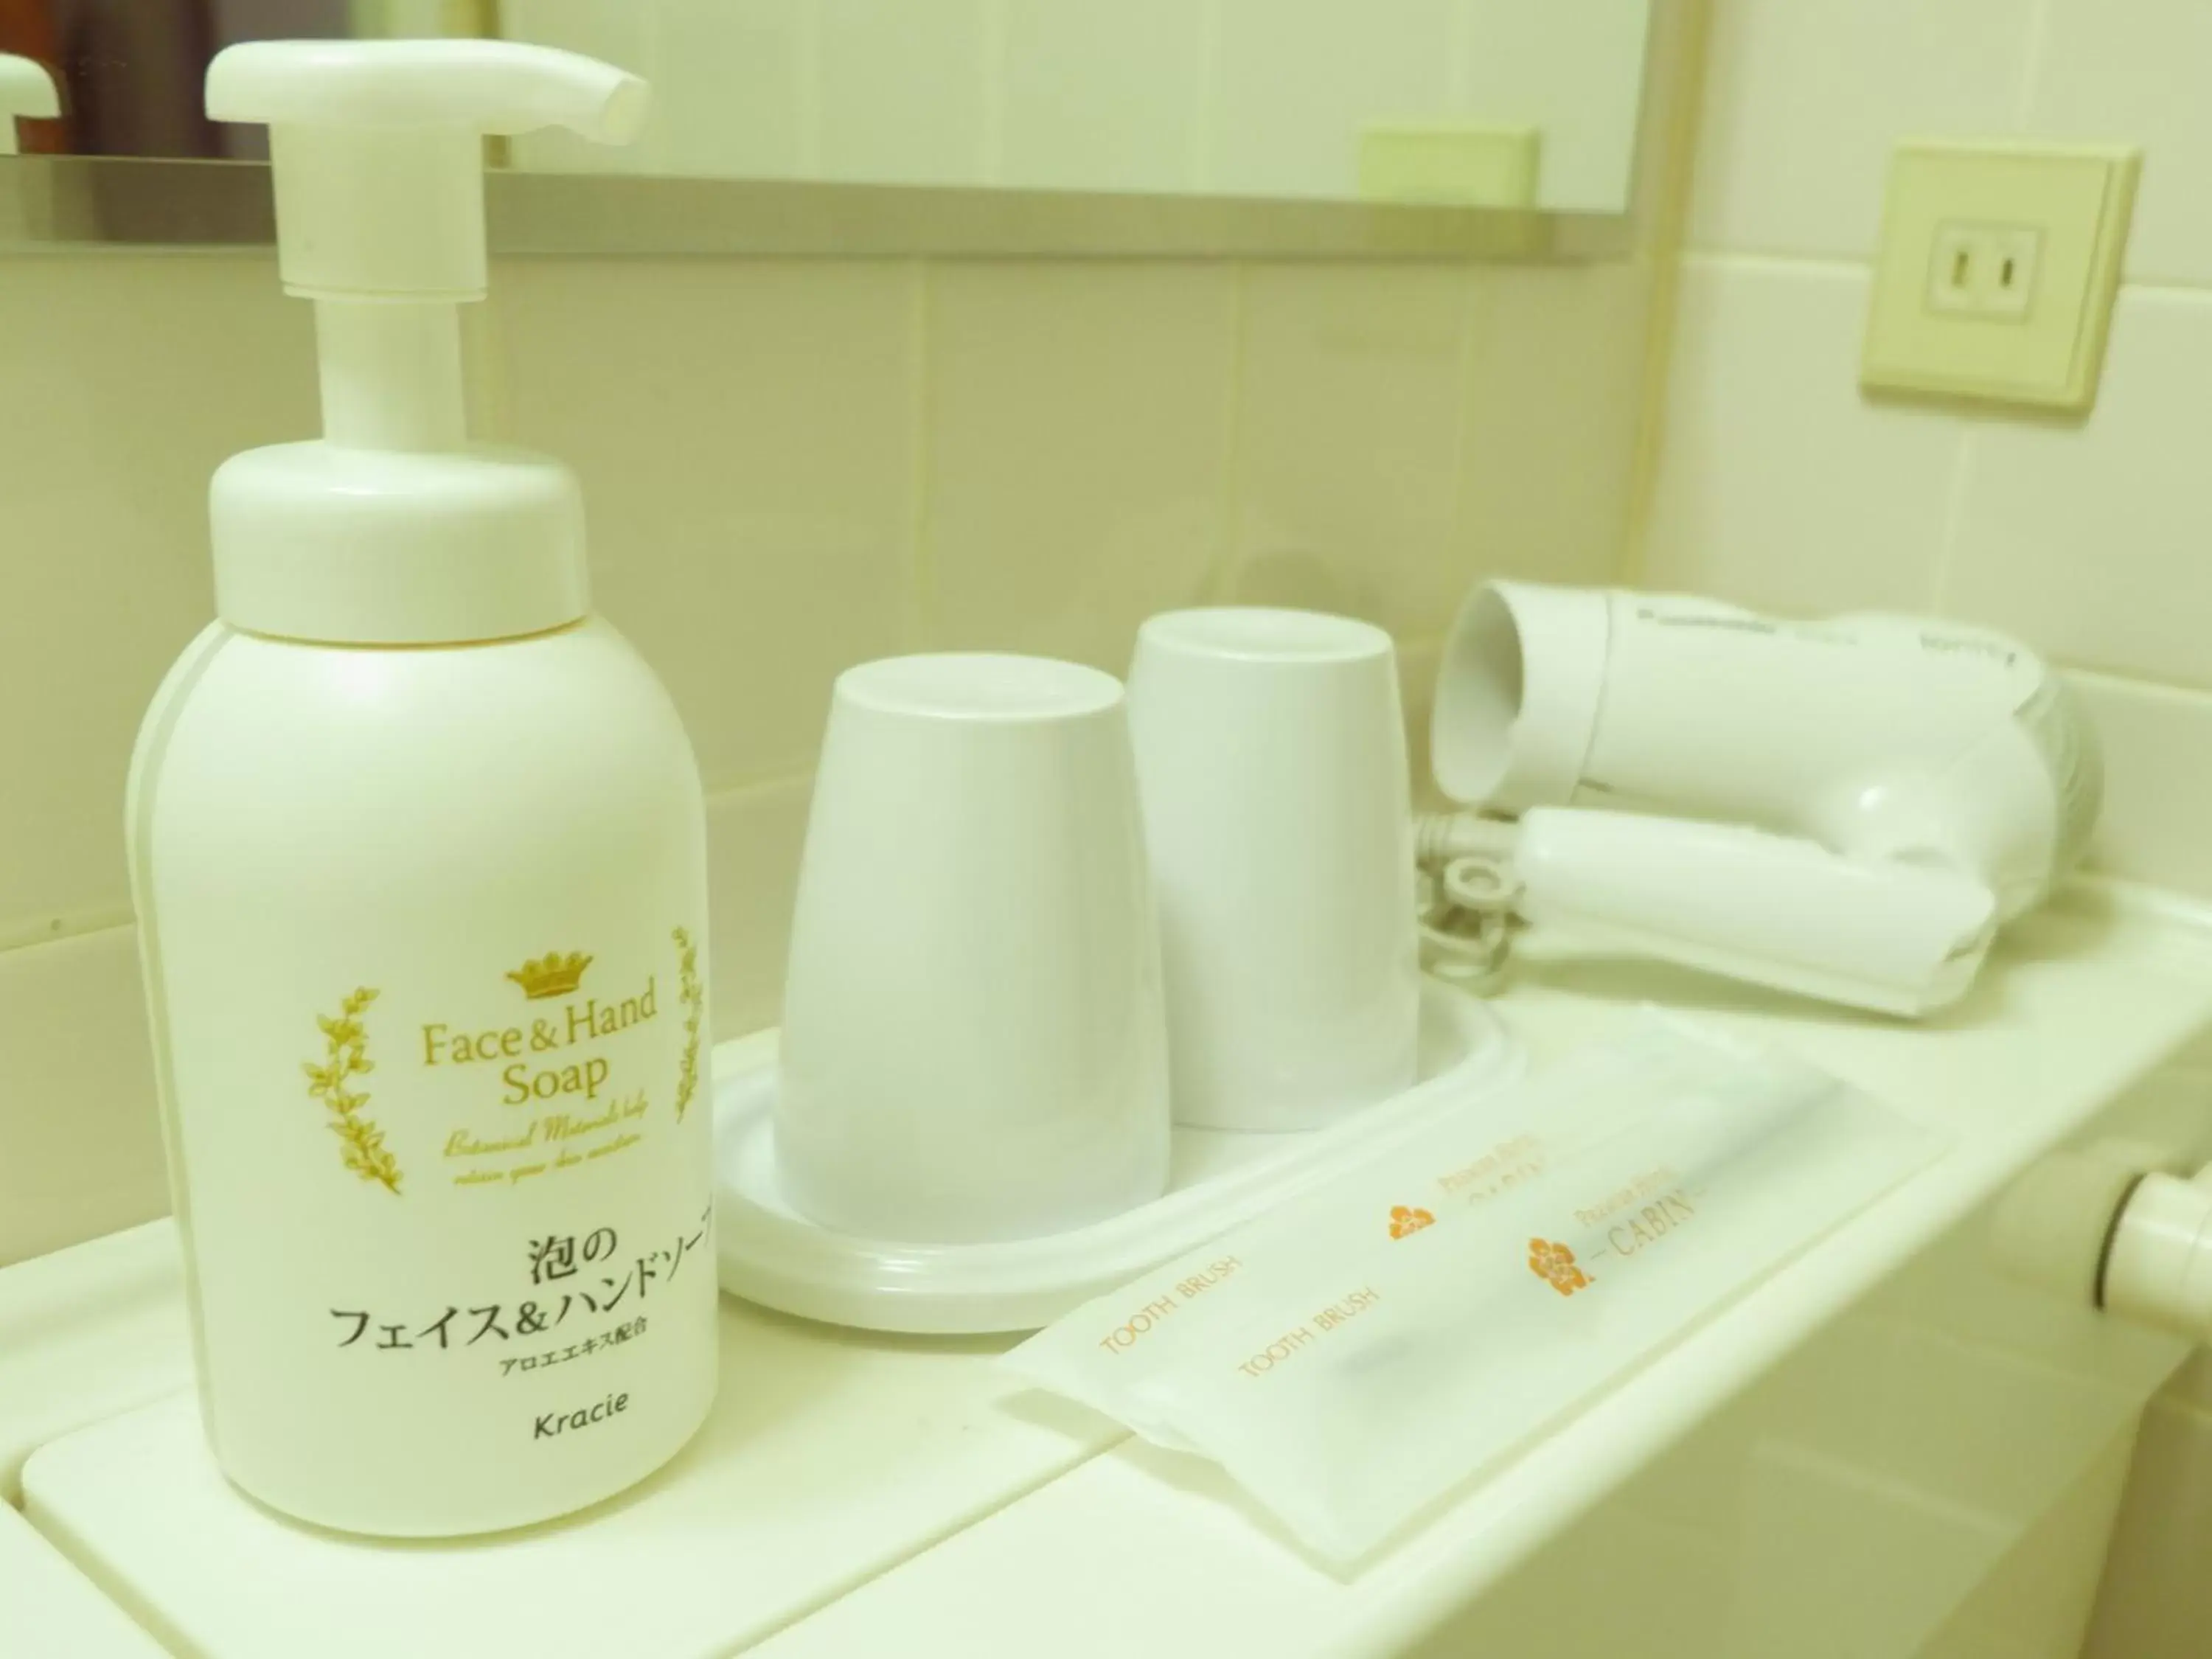 Bathroom in Premier Hotel -CABIN- Obihiro